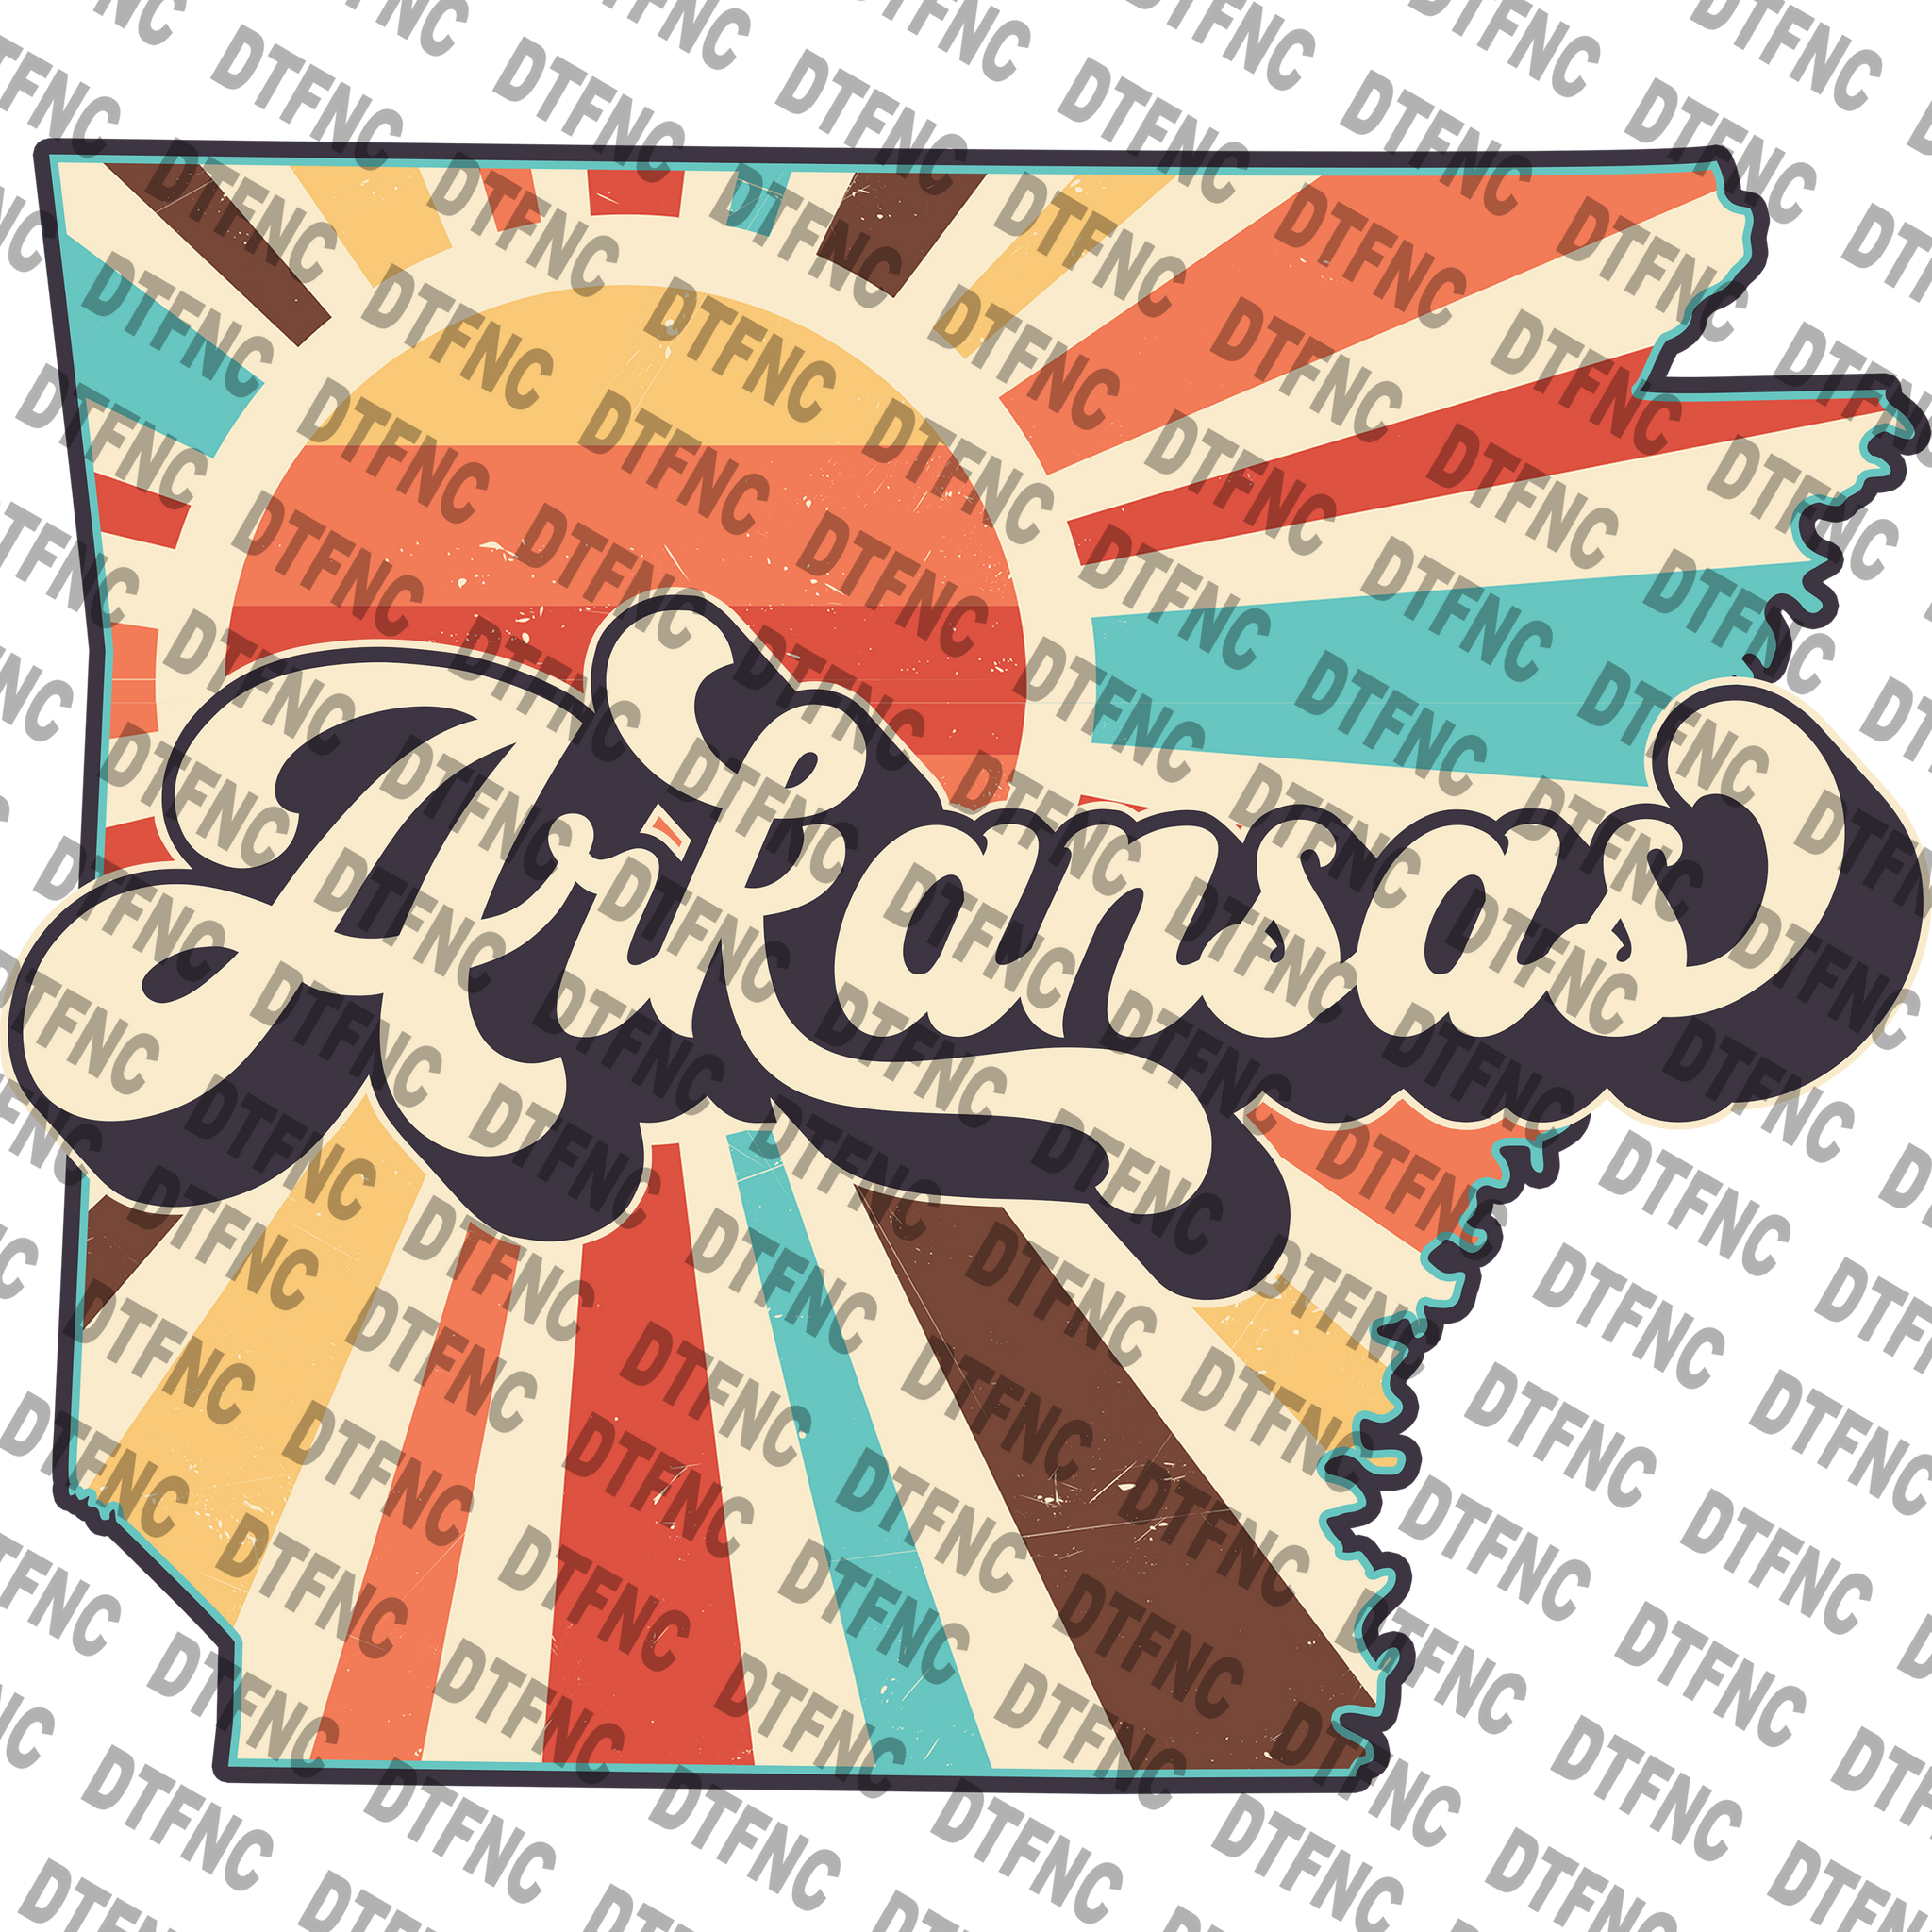 State - Arkansas